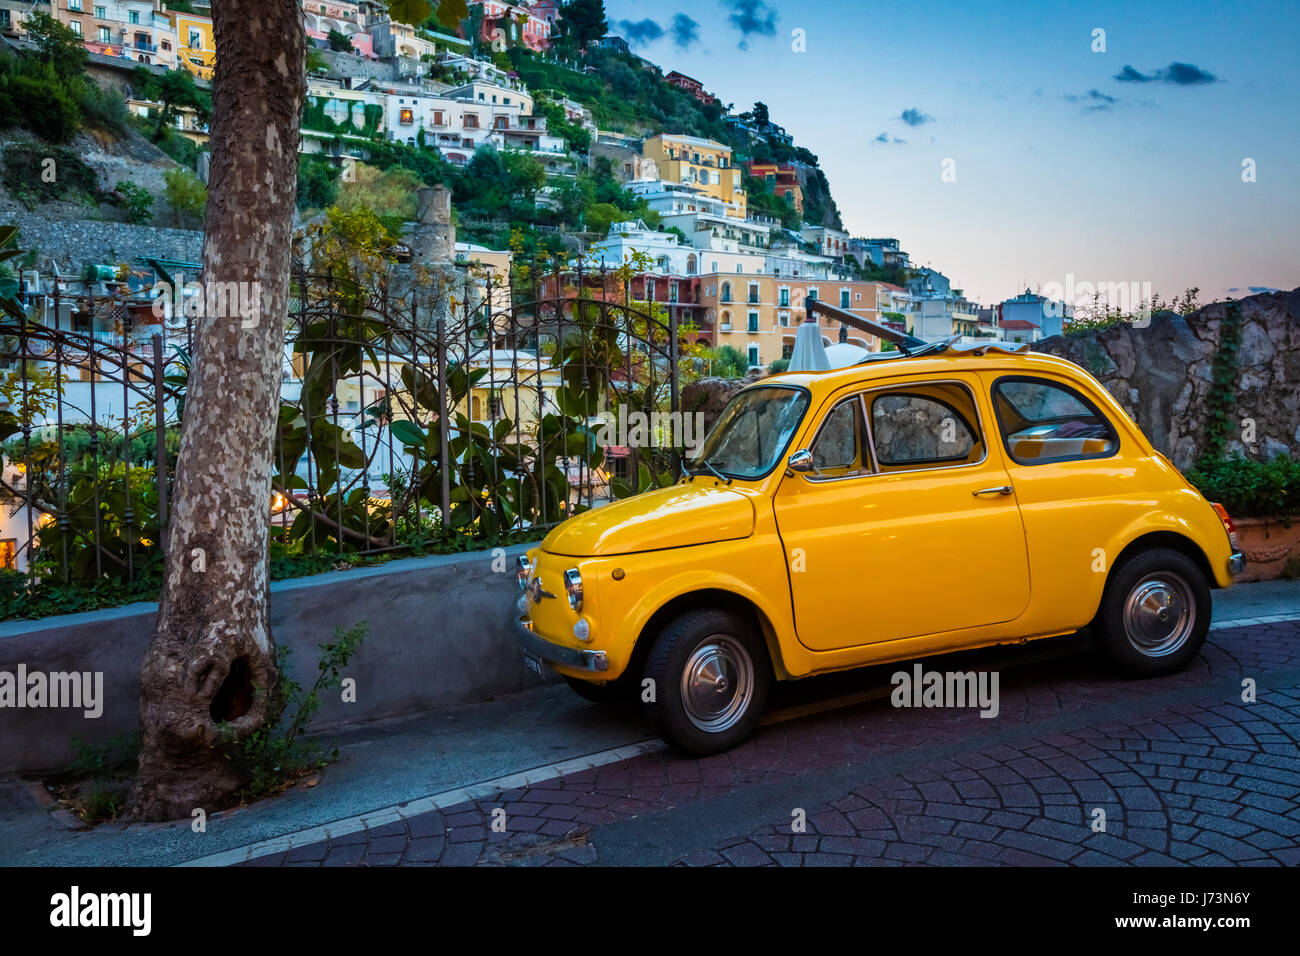 Fiat amarillo en Positano en la costa Amalfitana de Italia. Foto de stock